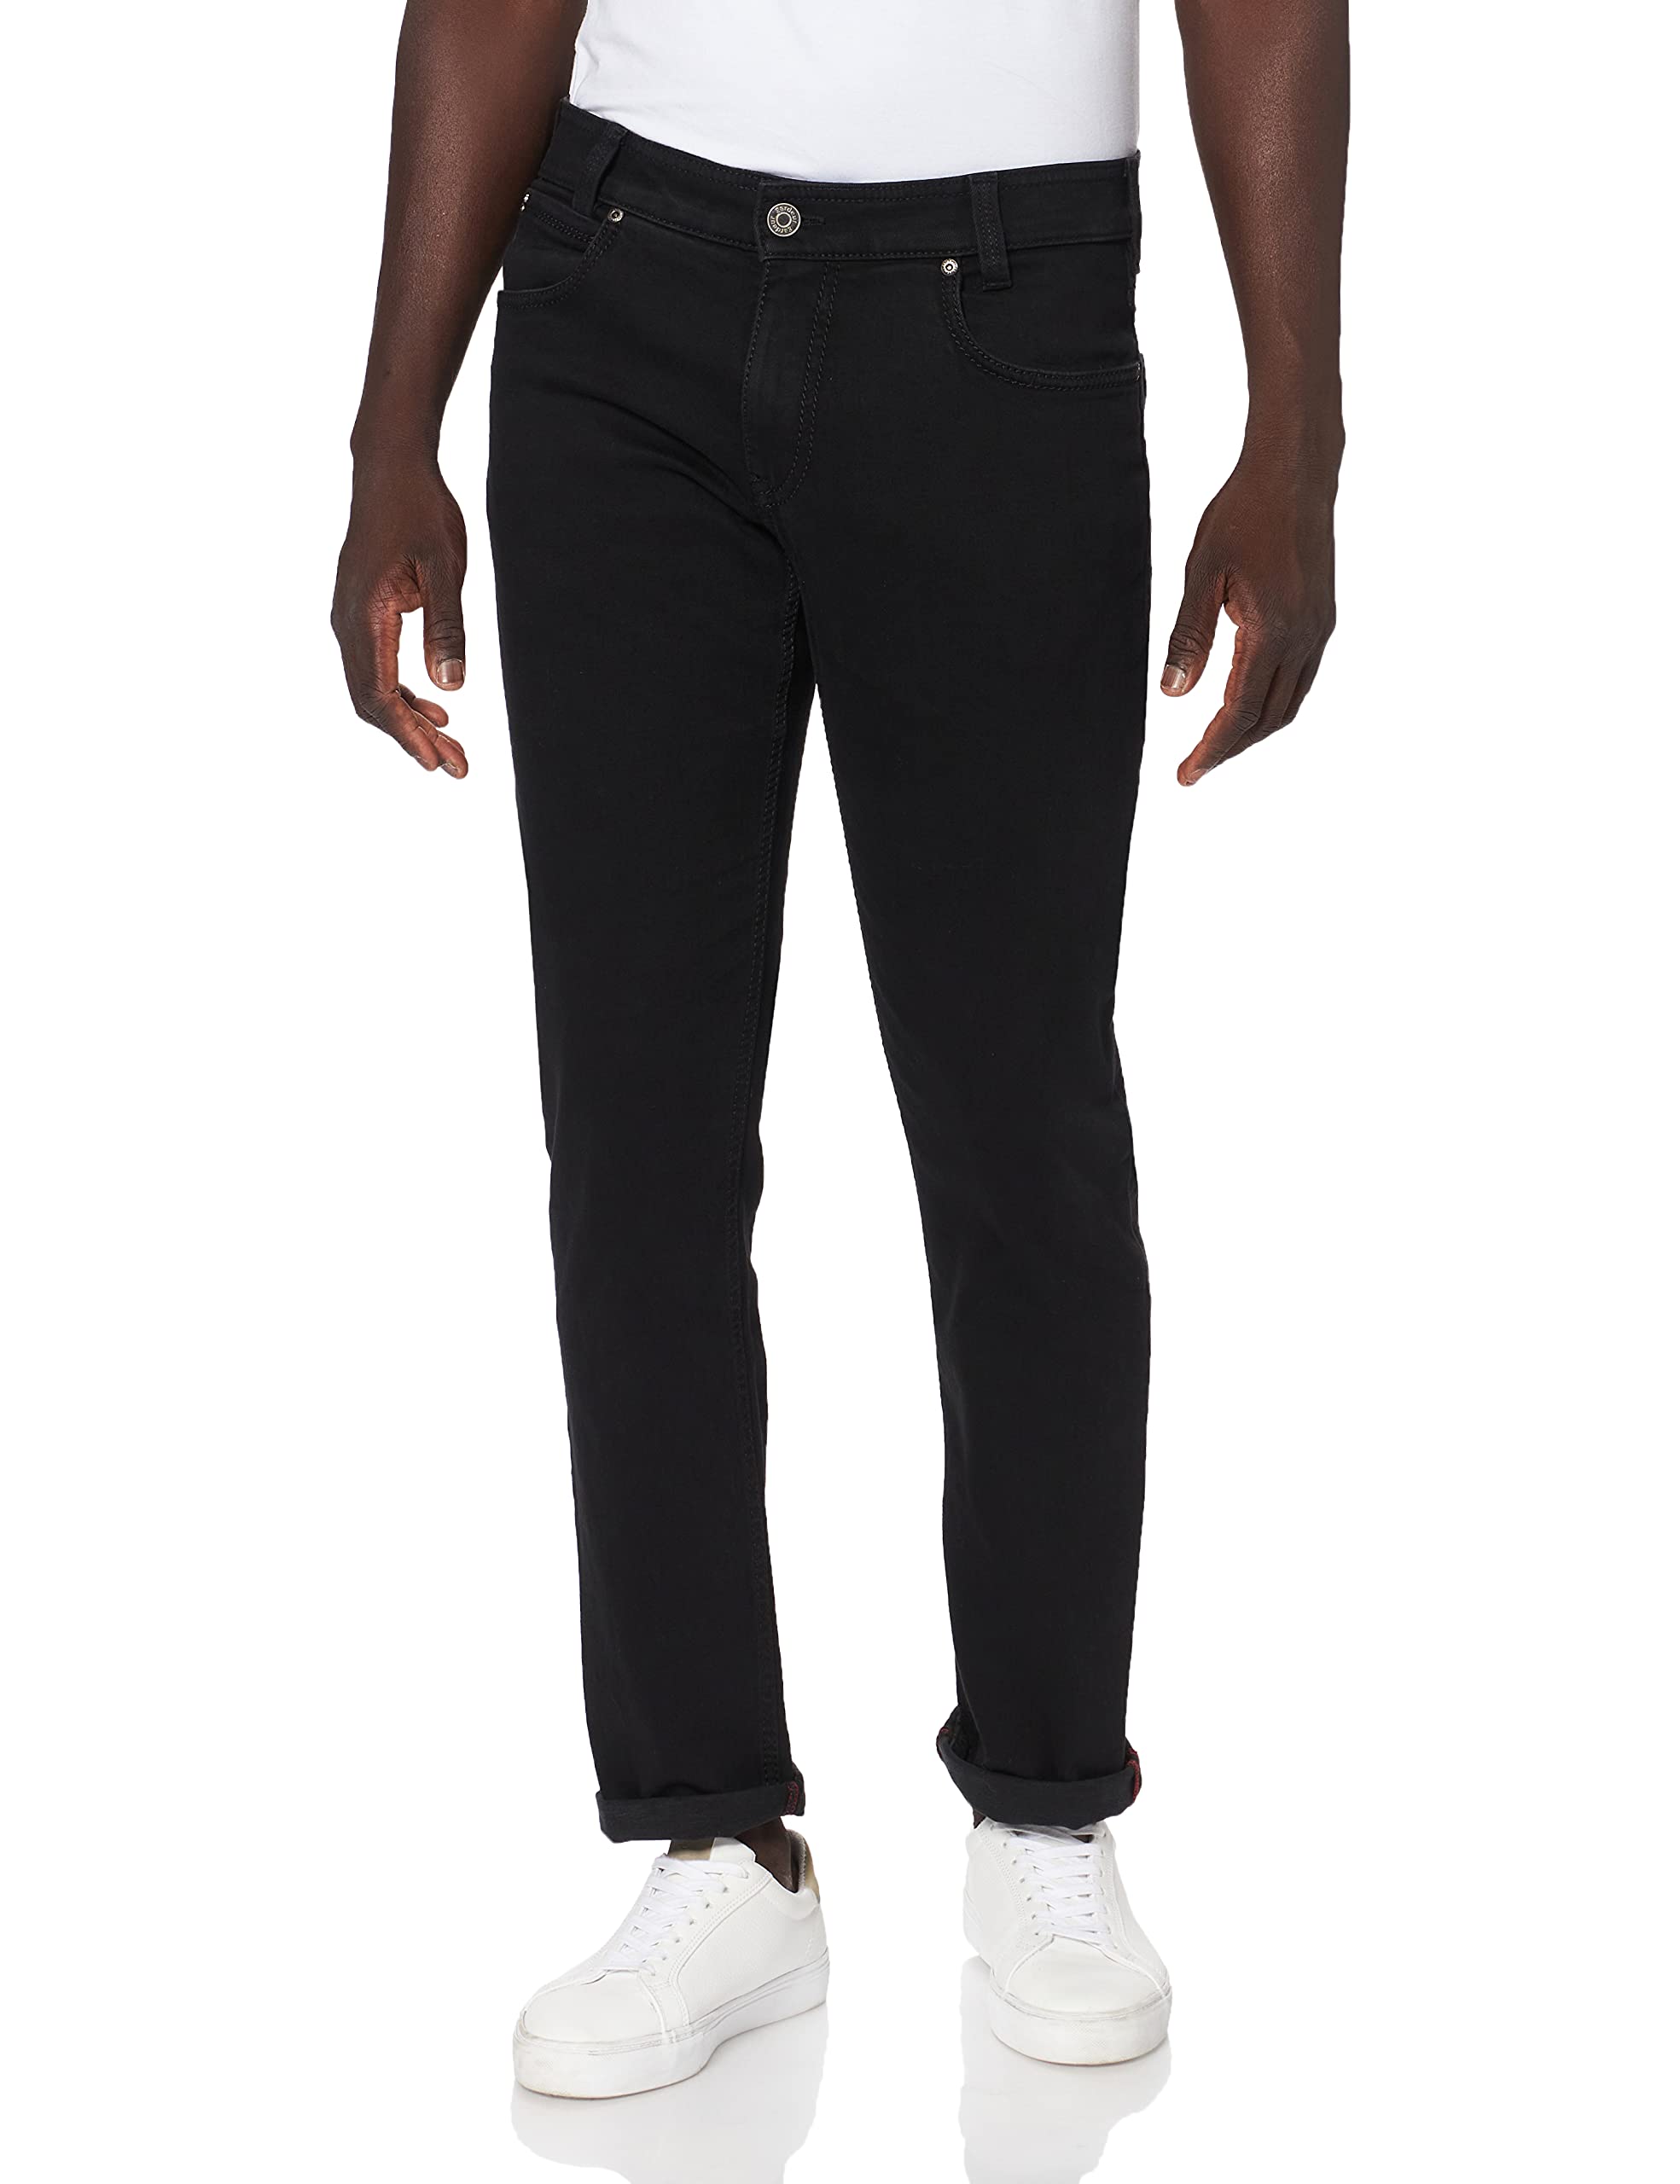 Atelier GARDEUR Herren Batu Comfort Stretch Jeans, Black/Black 799, 38W / 32L